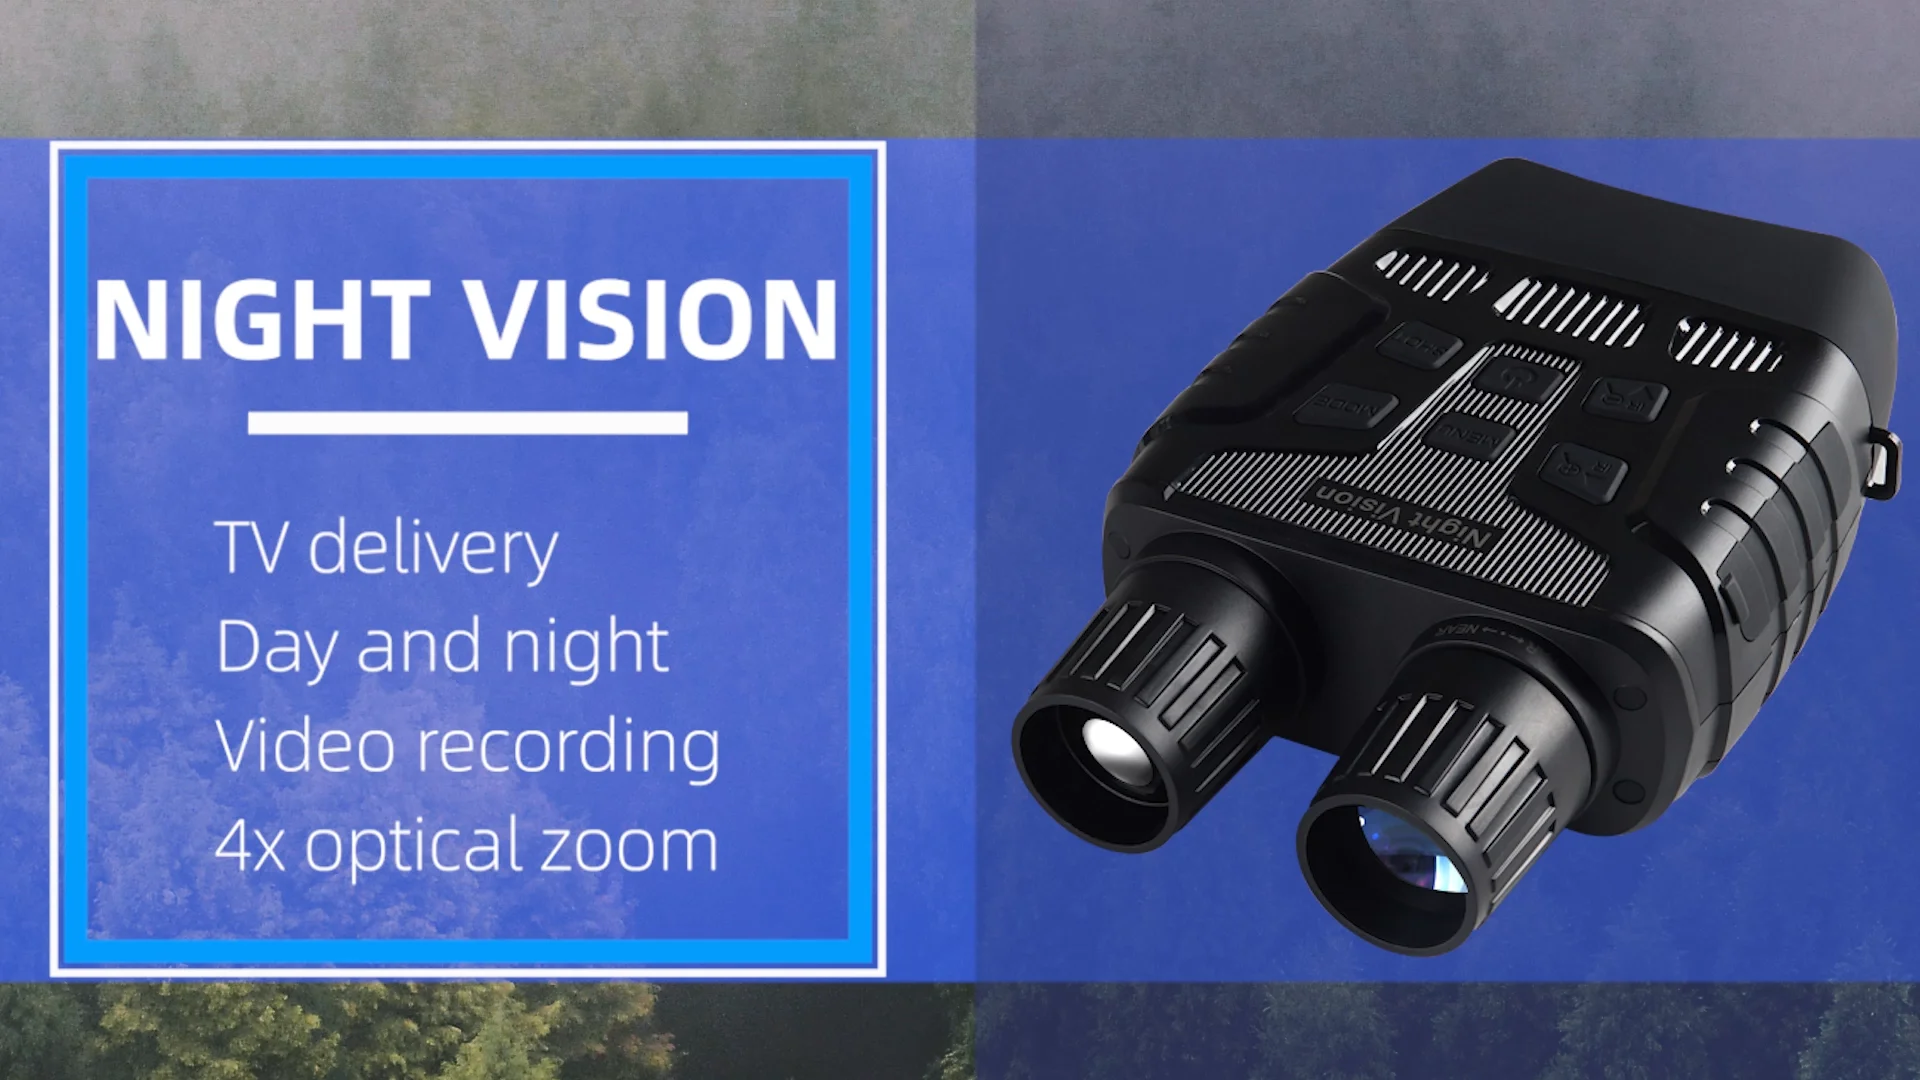 

China professional Night Vision scope Binoculars Telescope All Black Digital Display IR Hunting Infrared Night Vision